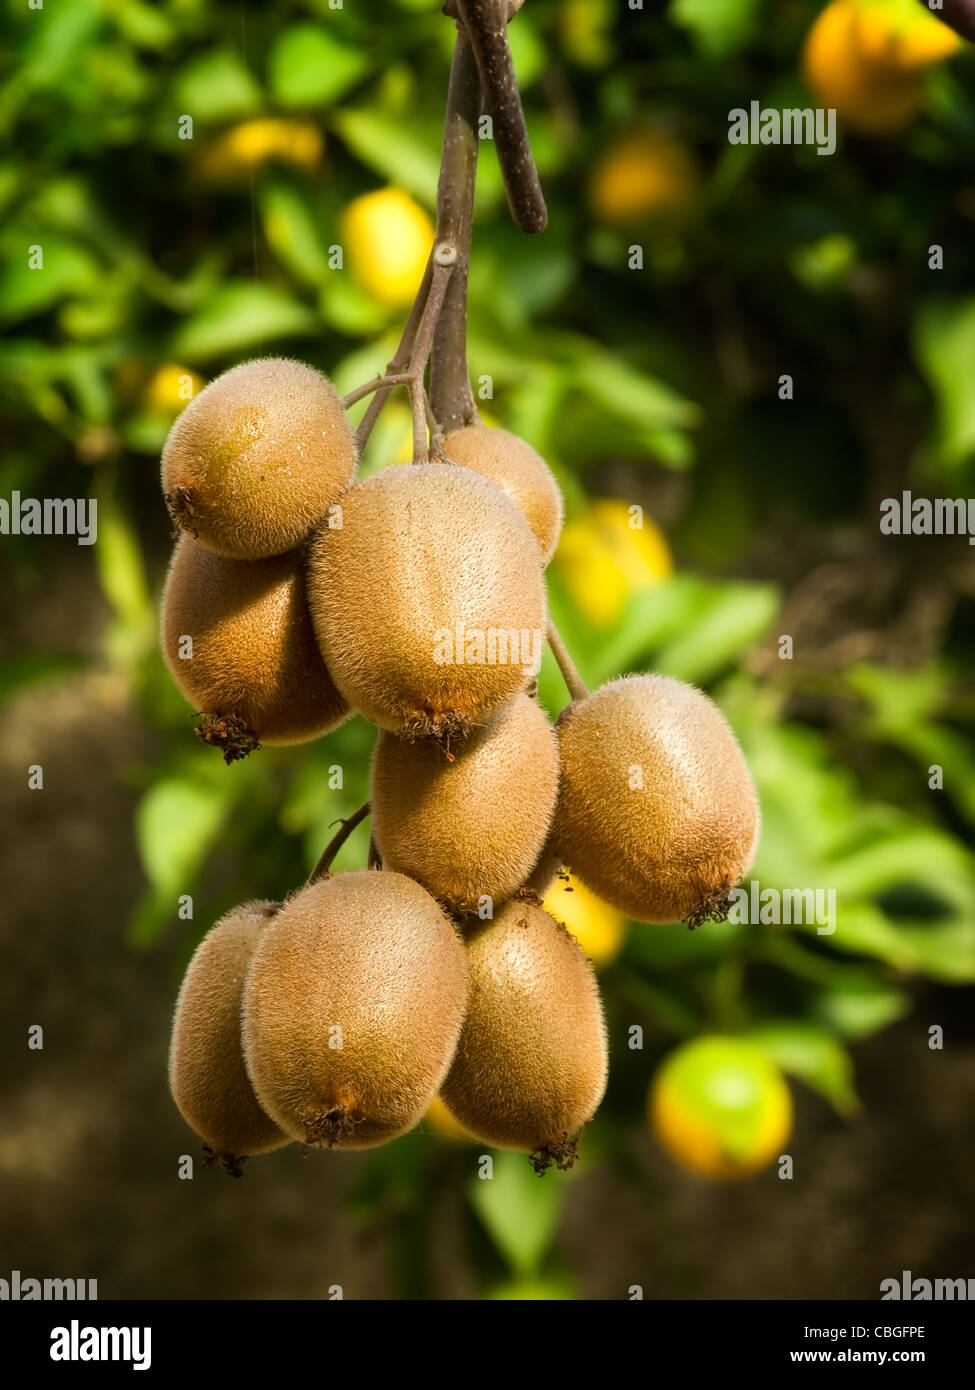 Ripe Kiwi fruit Stock Photo